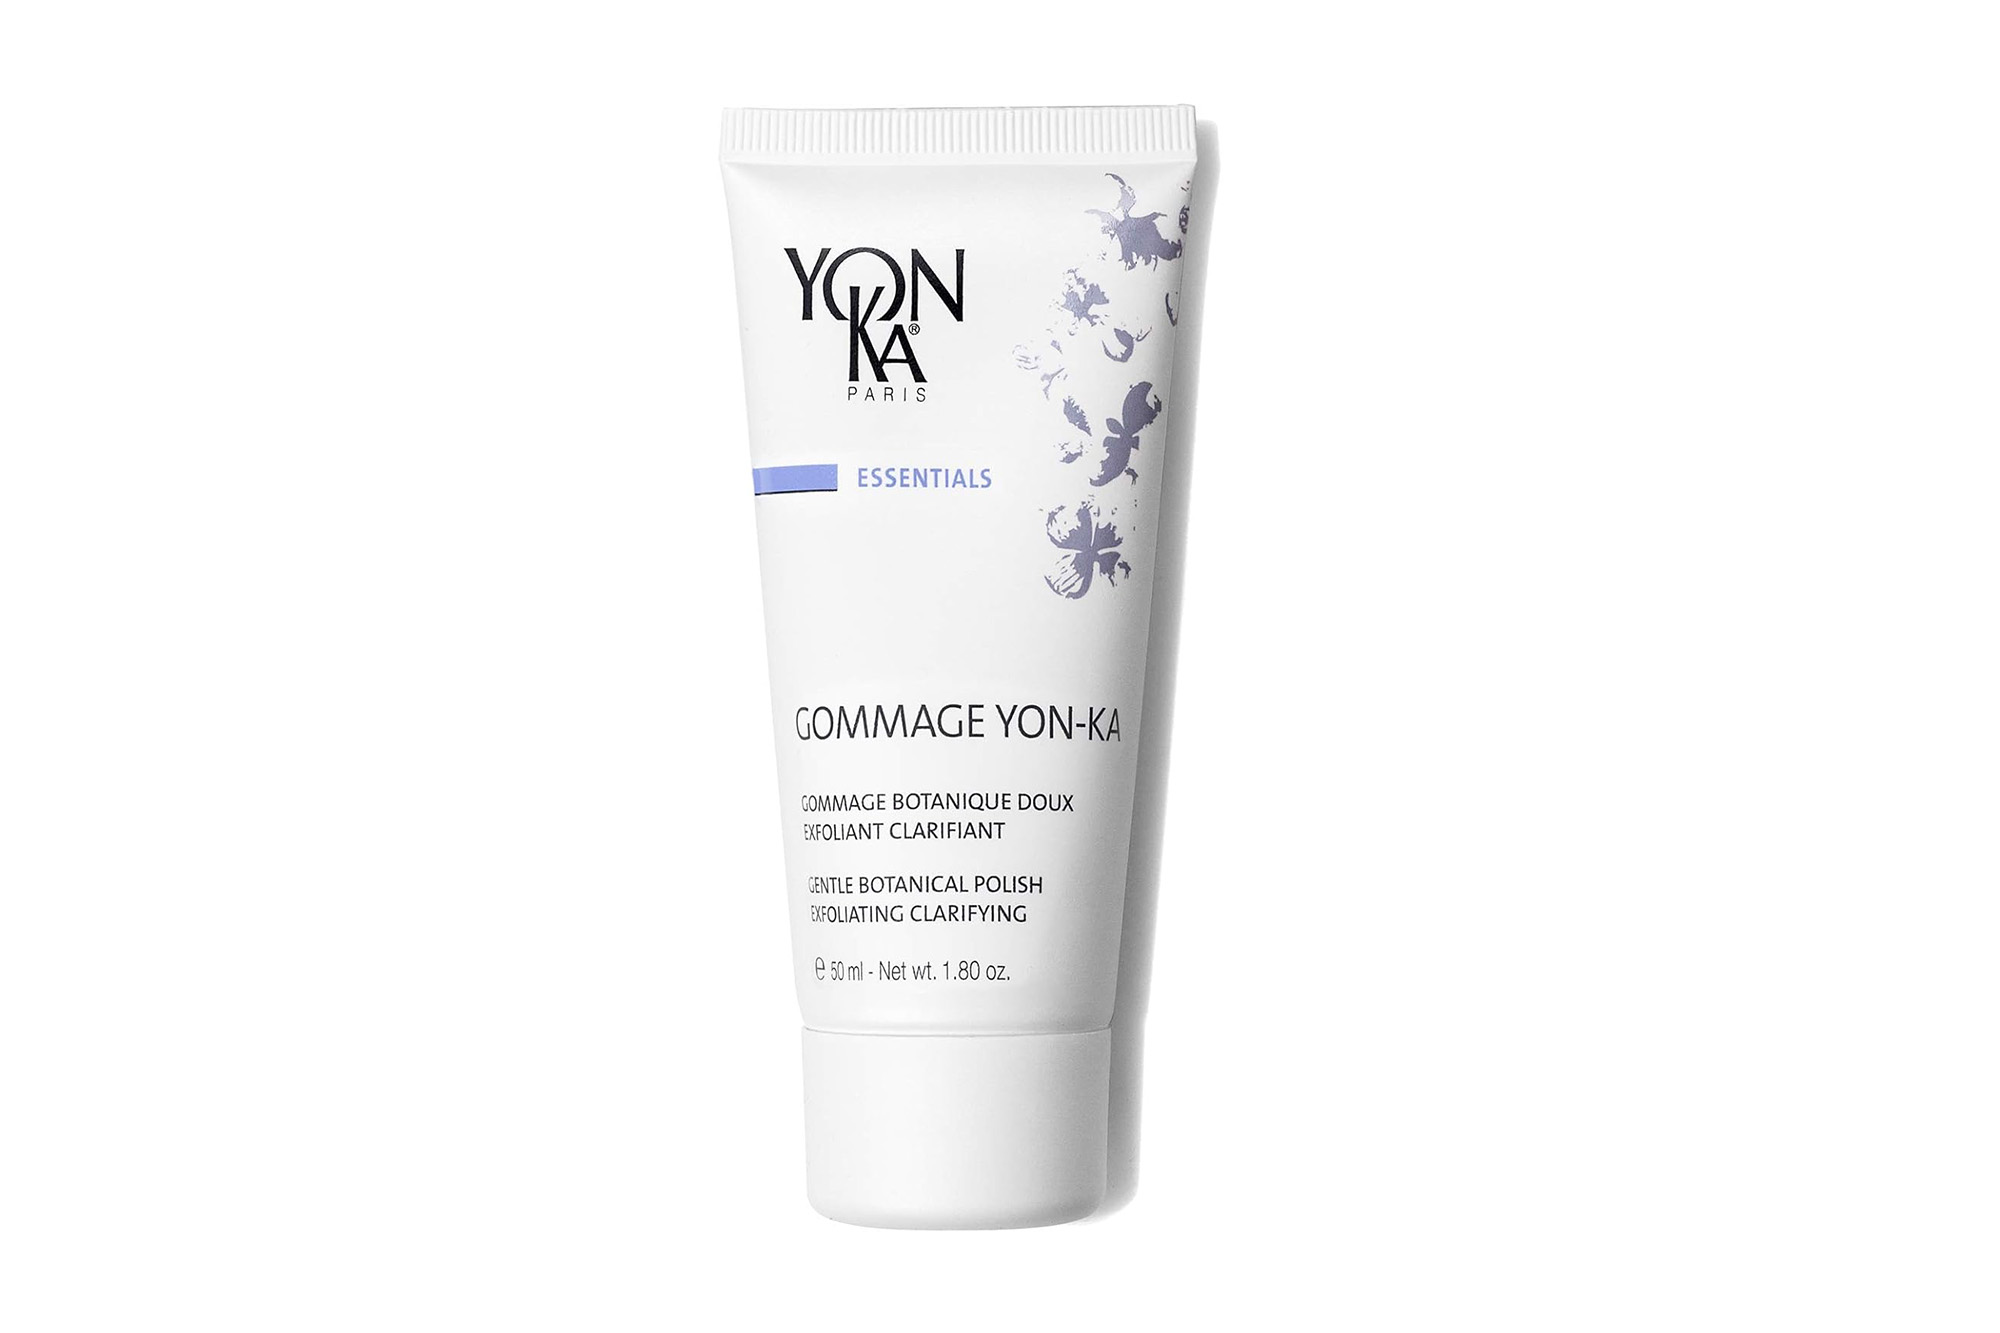 Yonka Paris Grommage Cream